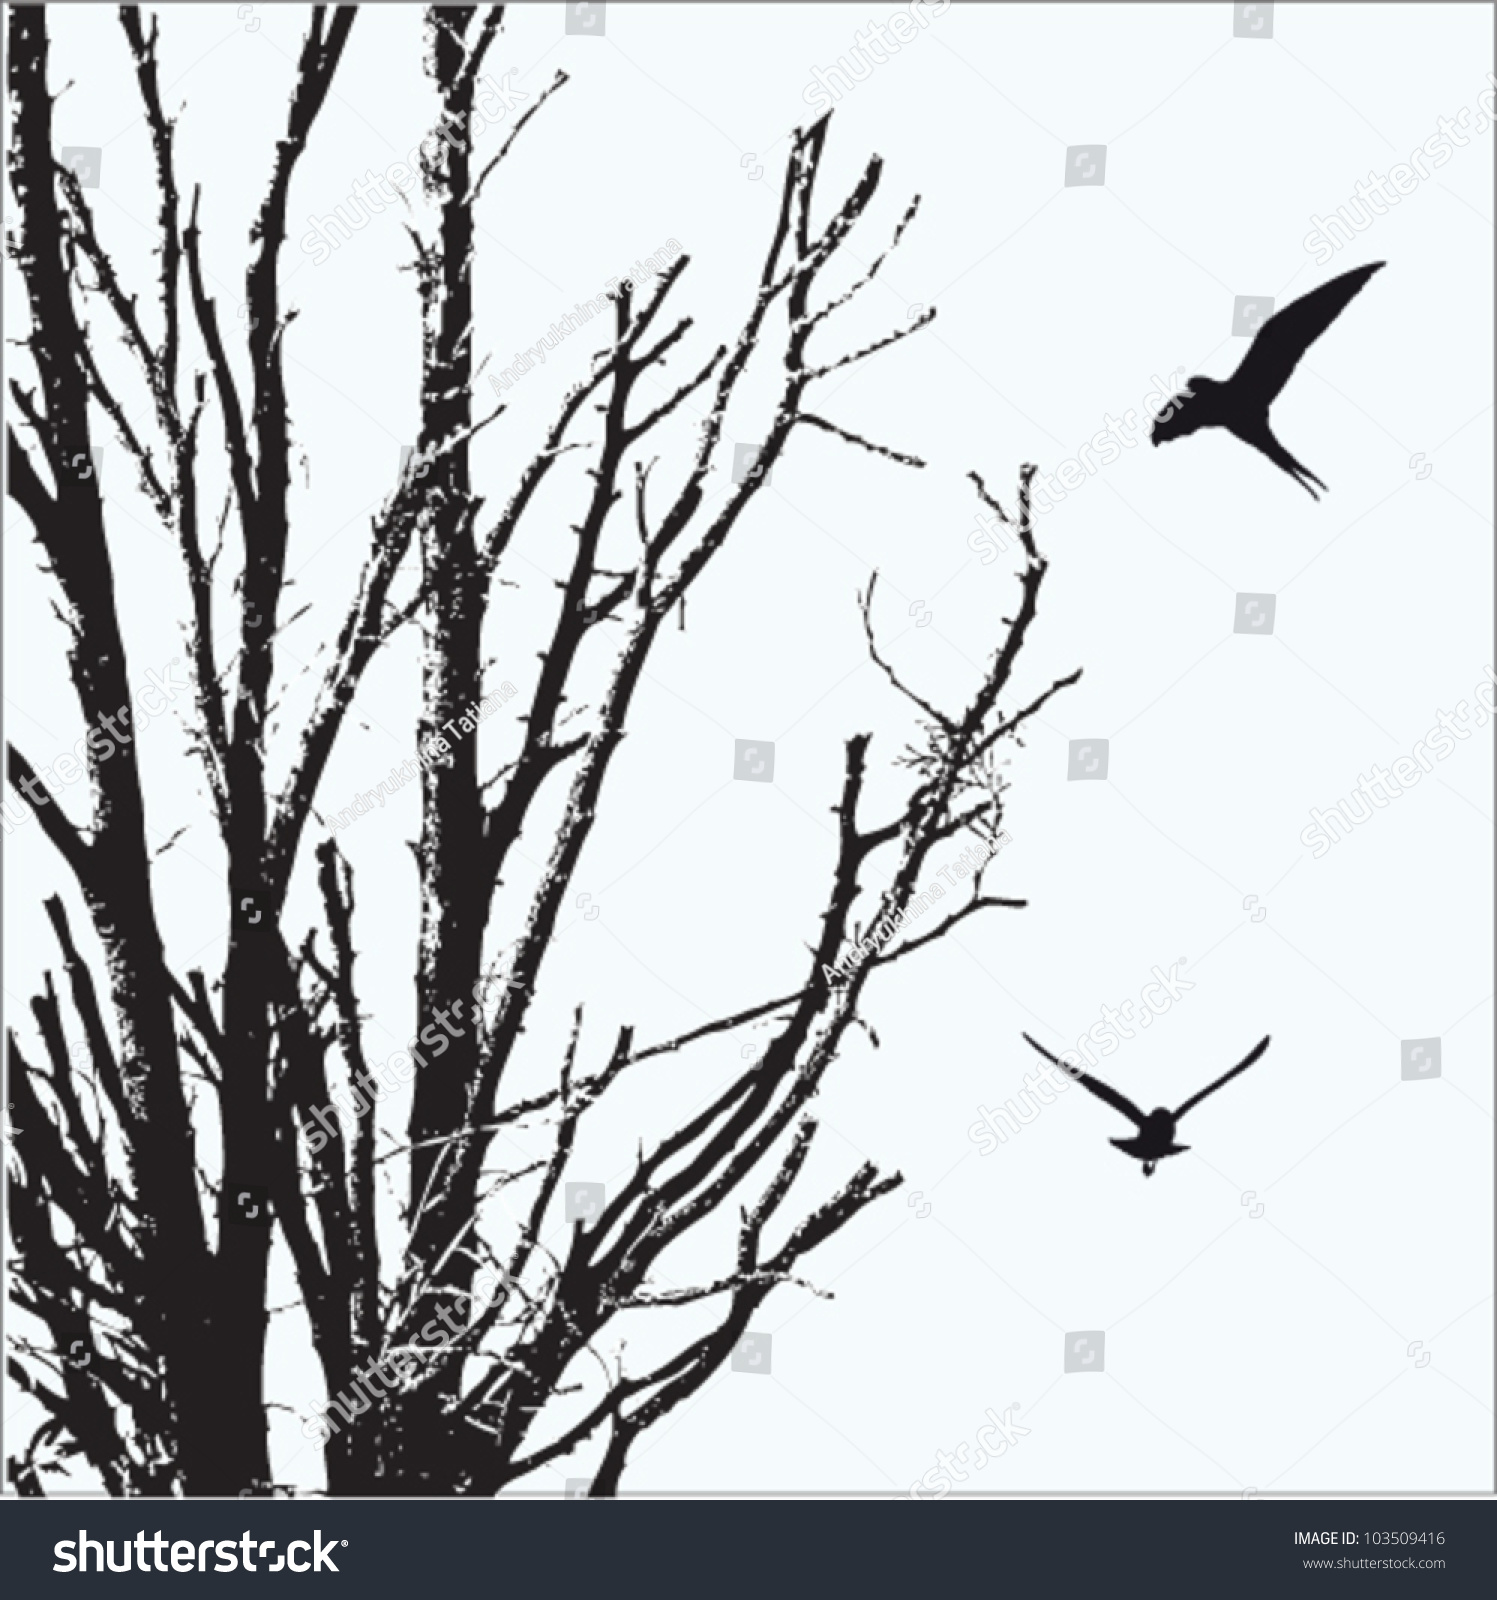 Tree Silhouette - Detailed Vector - 103509416 : Shutterstock